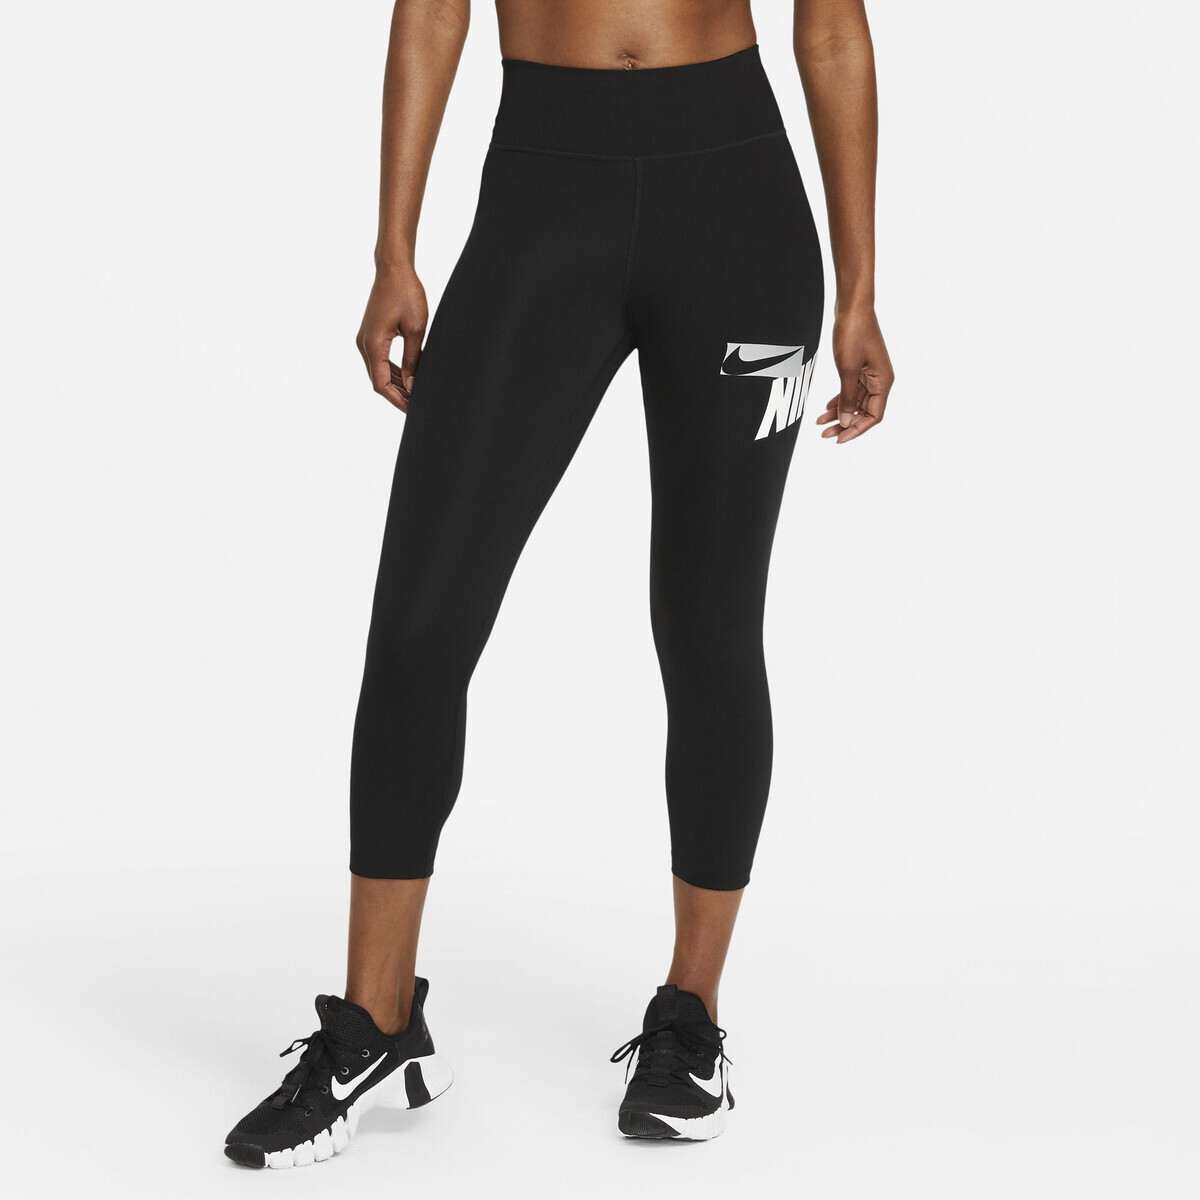 Calza Nike Running dama One Crop Negro/blanco - S/C 